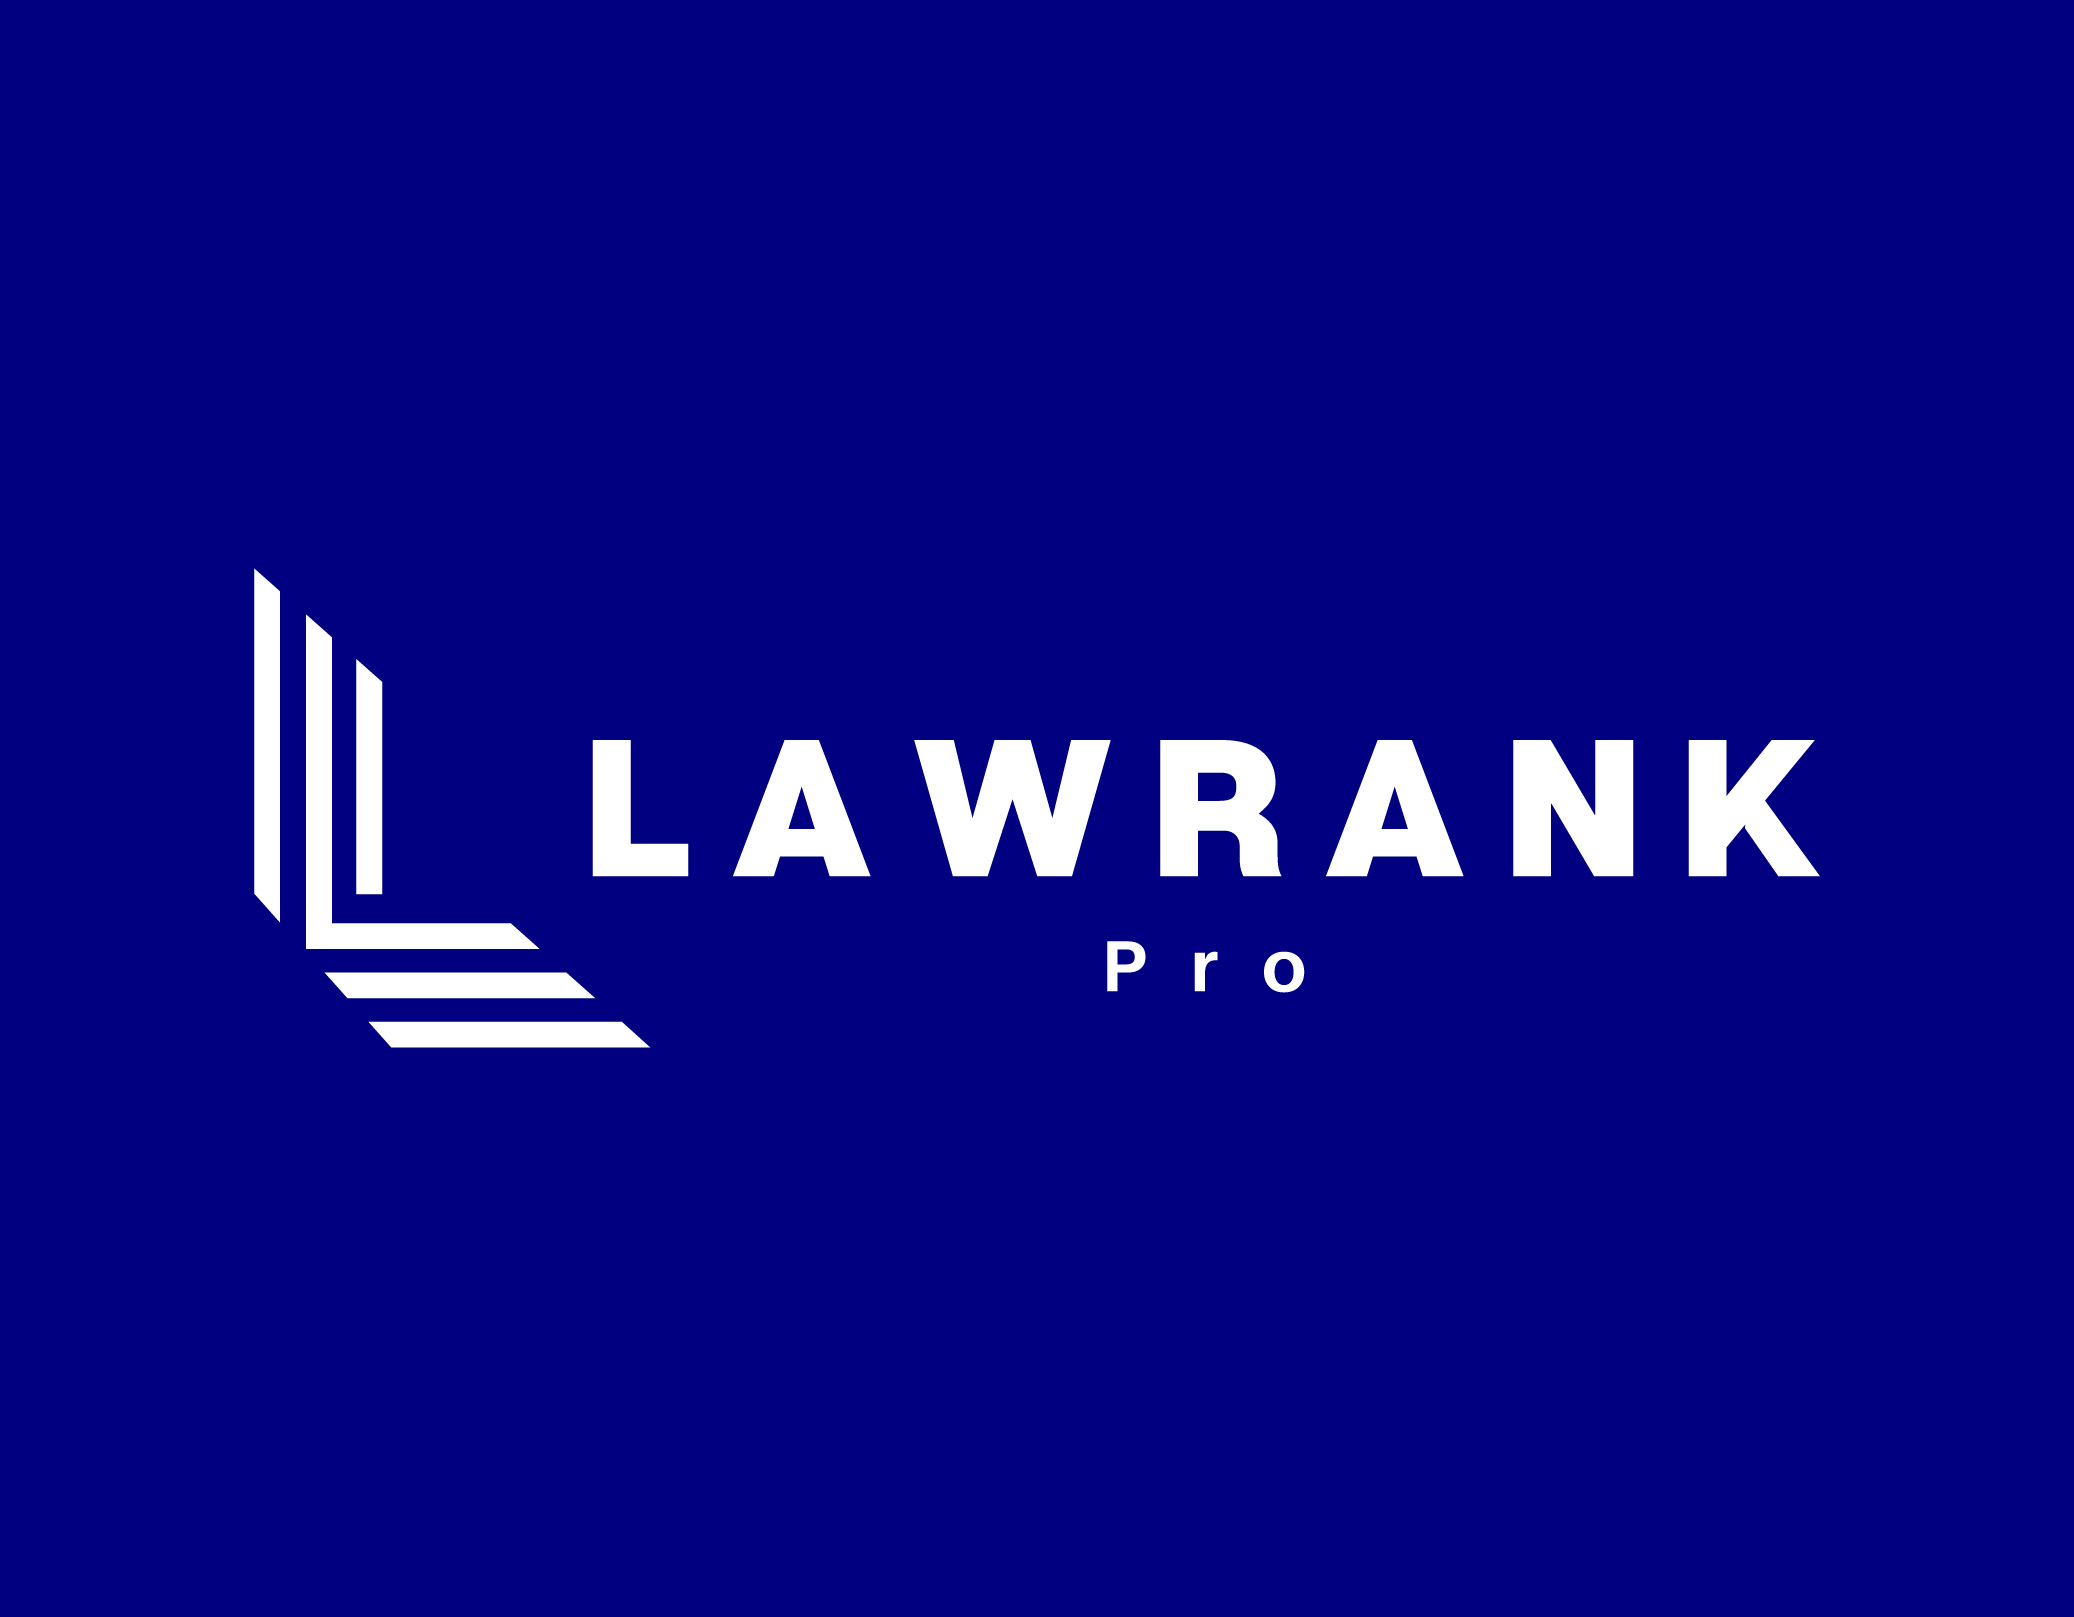 Law Rank Pro SEO